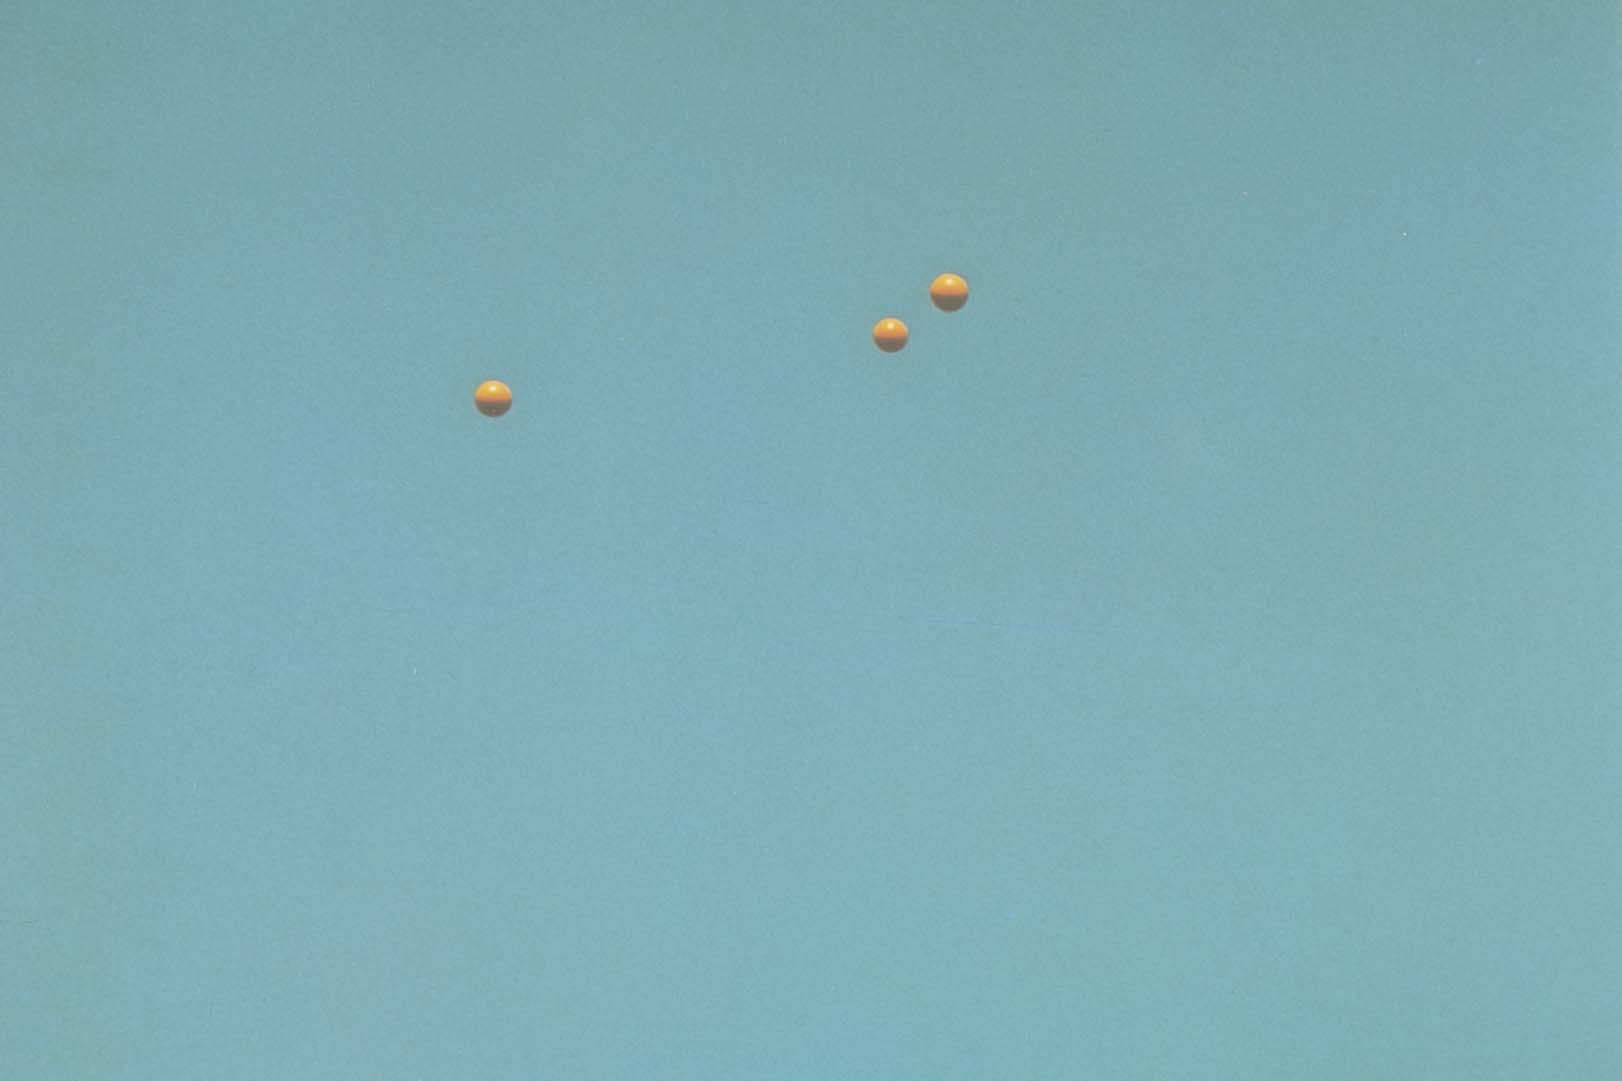 John Baldessari "Throwing Three Balls in the Air to get a Straight Line" , 1973